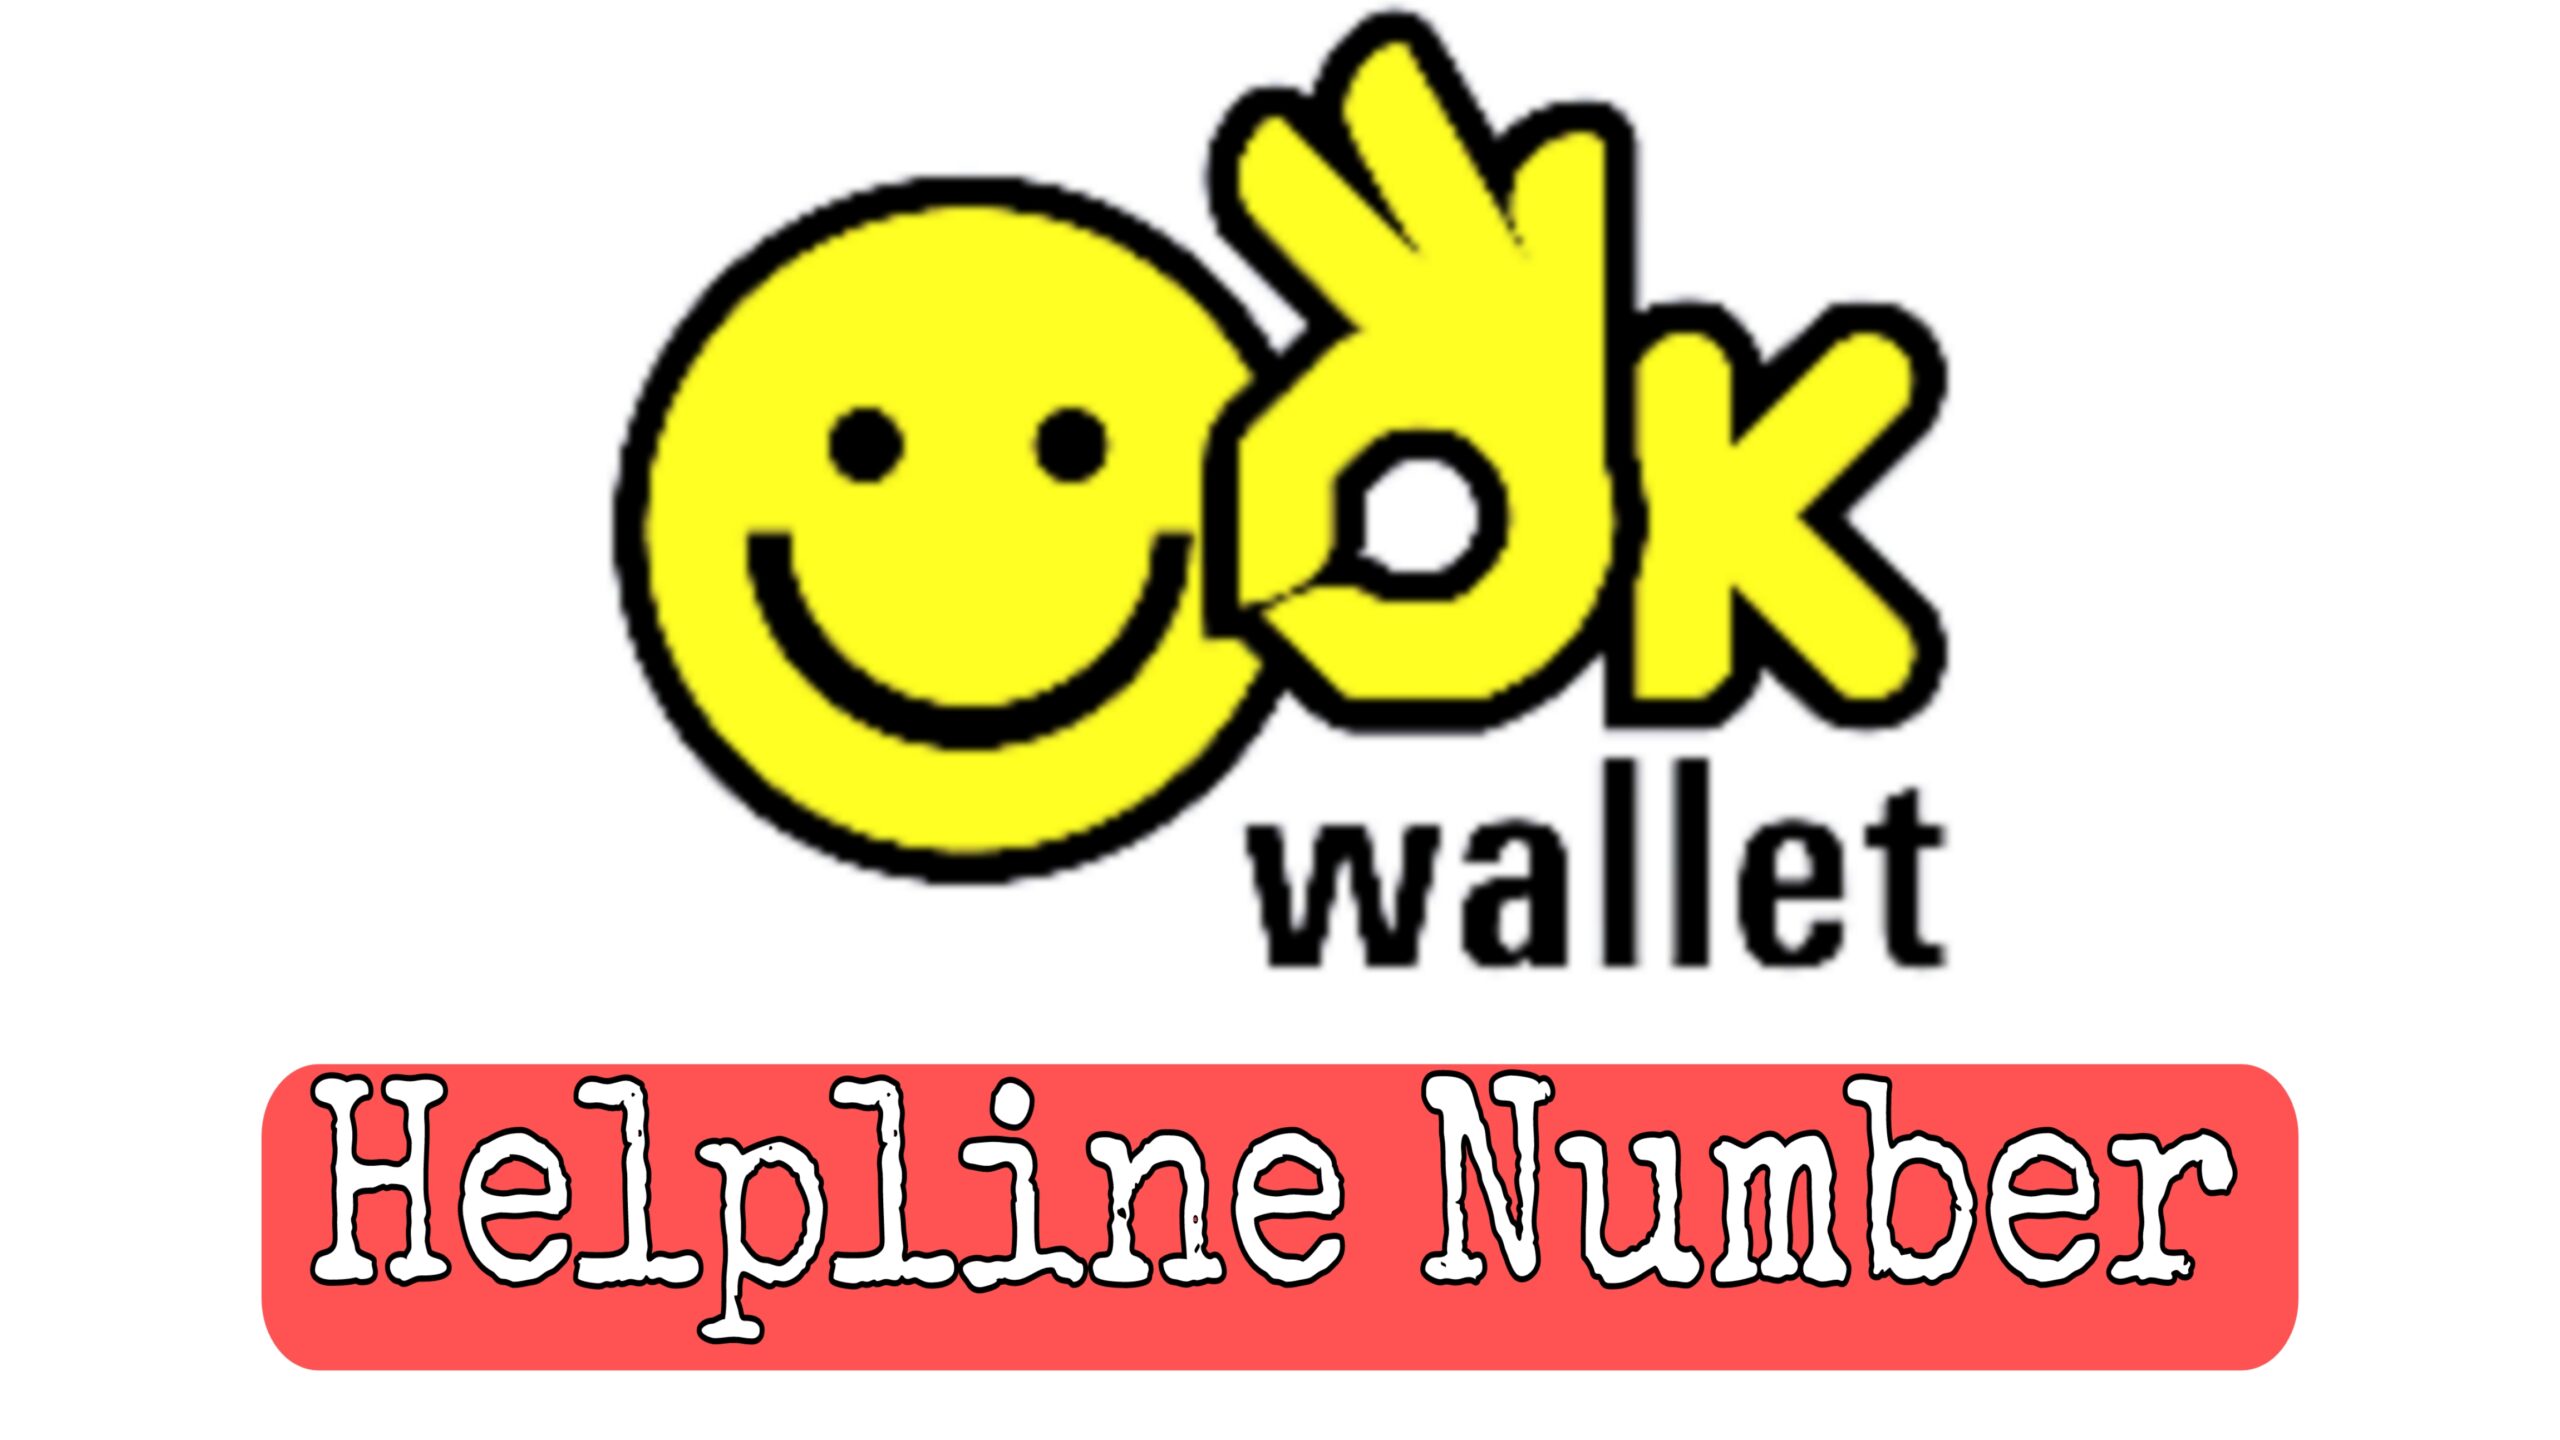 ok wallet helpline number